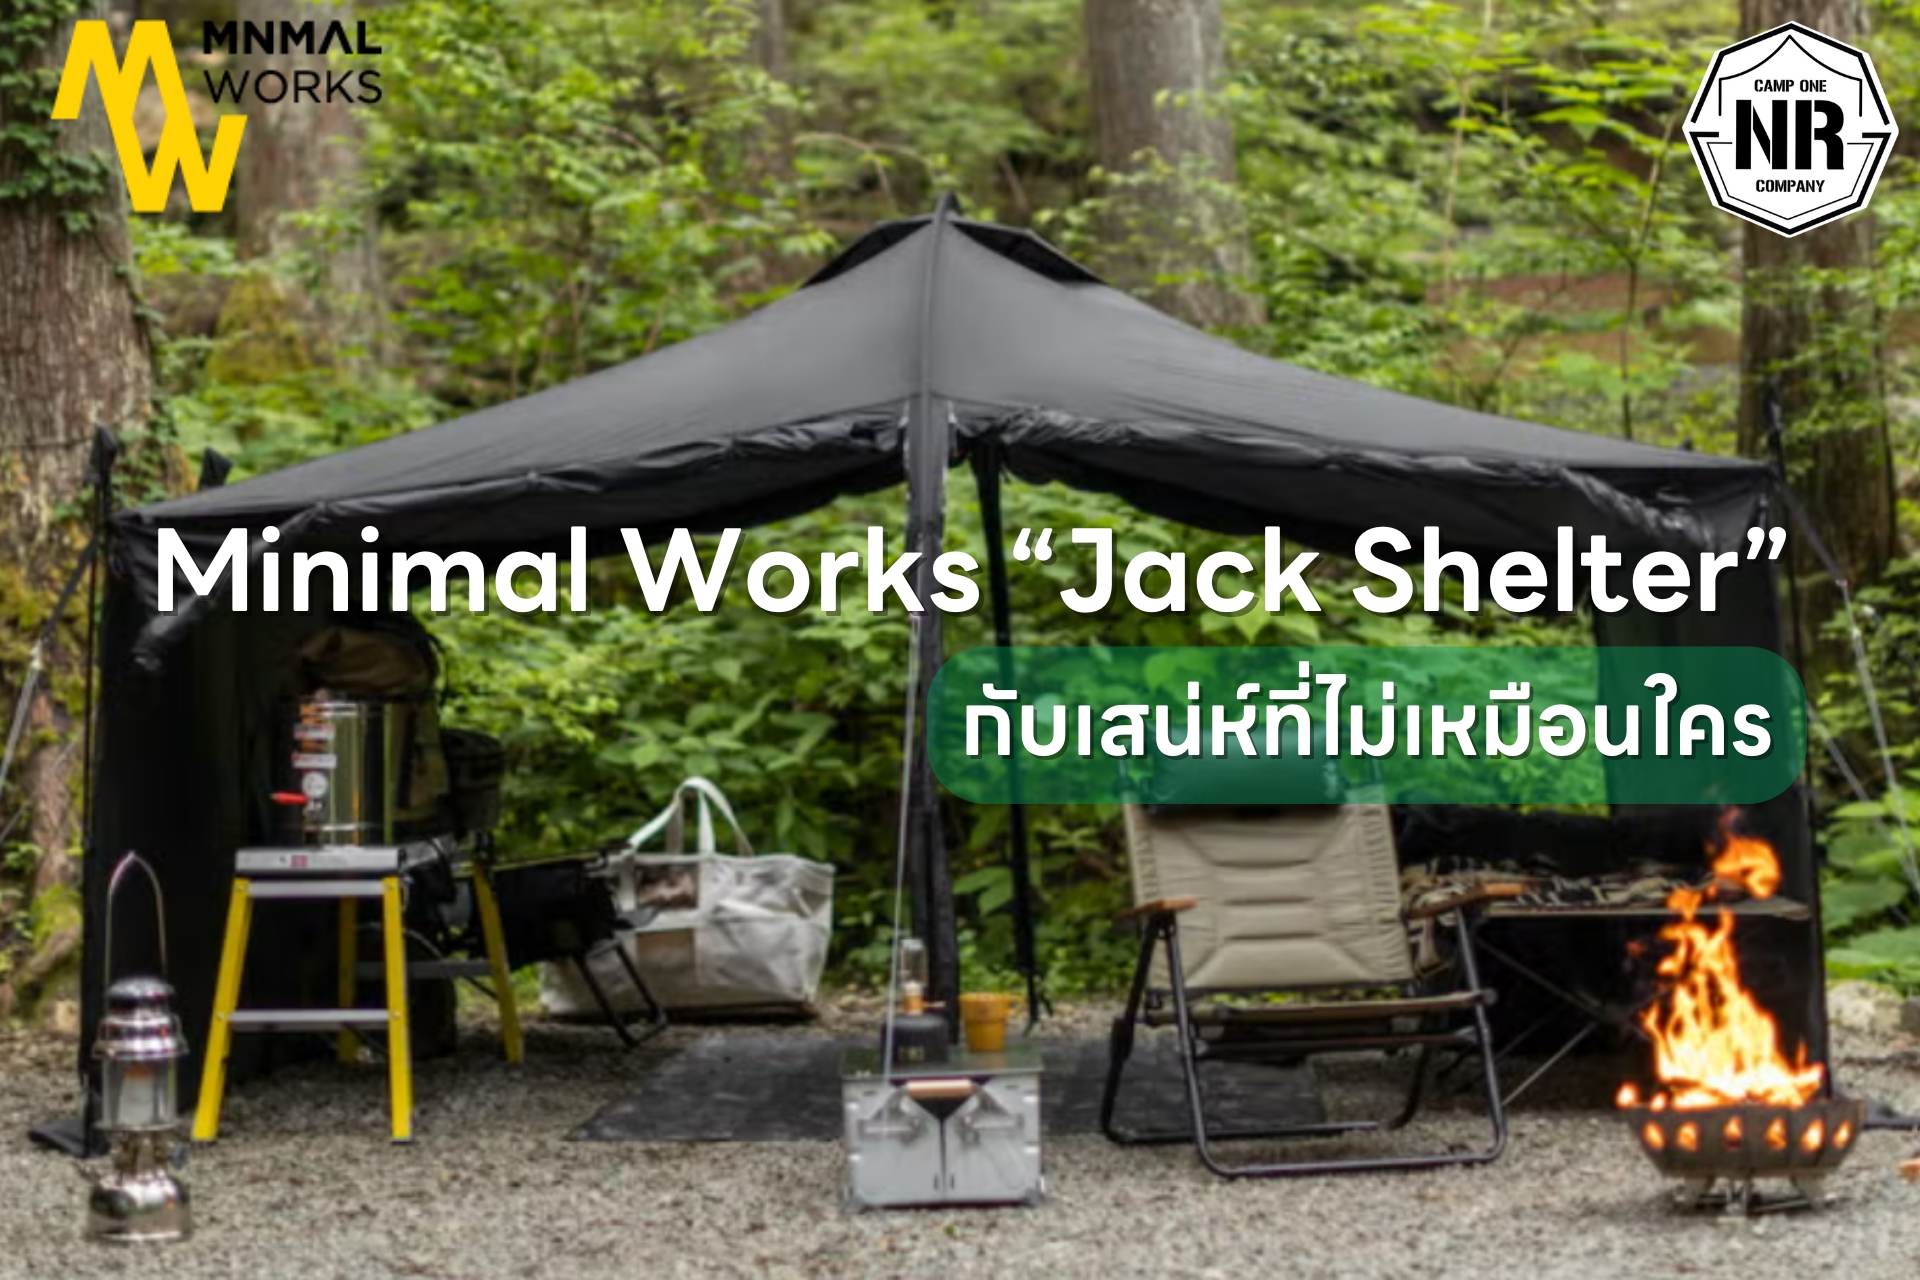 Minimal Works “Jack Shelter” เสน่ห์ที่ชาวแคมป์มีสไตล์ทุกคนใช้!